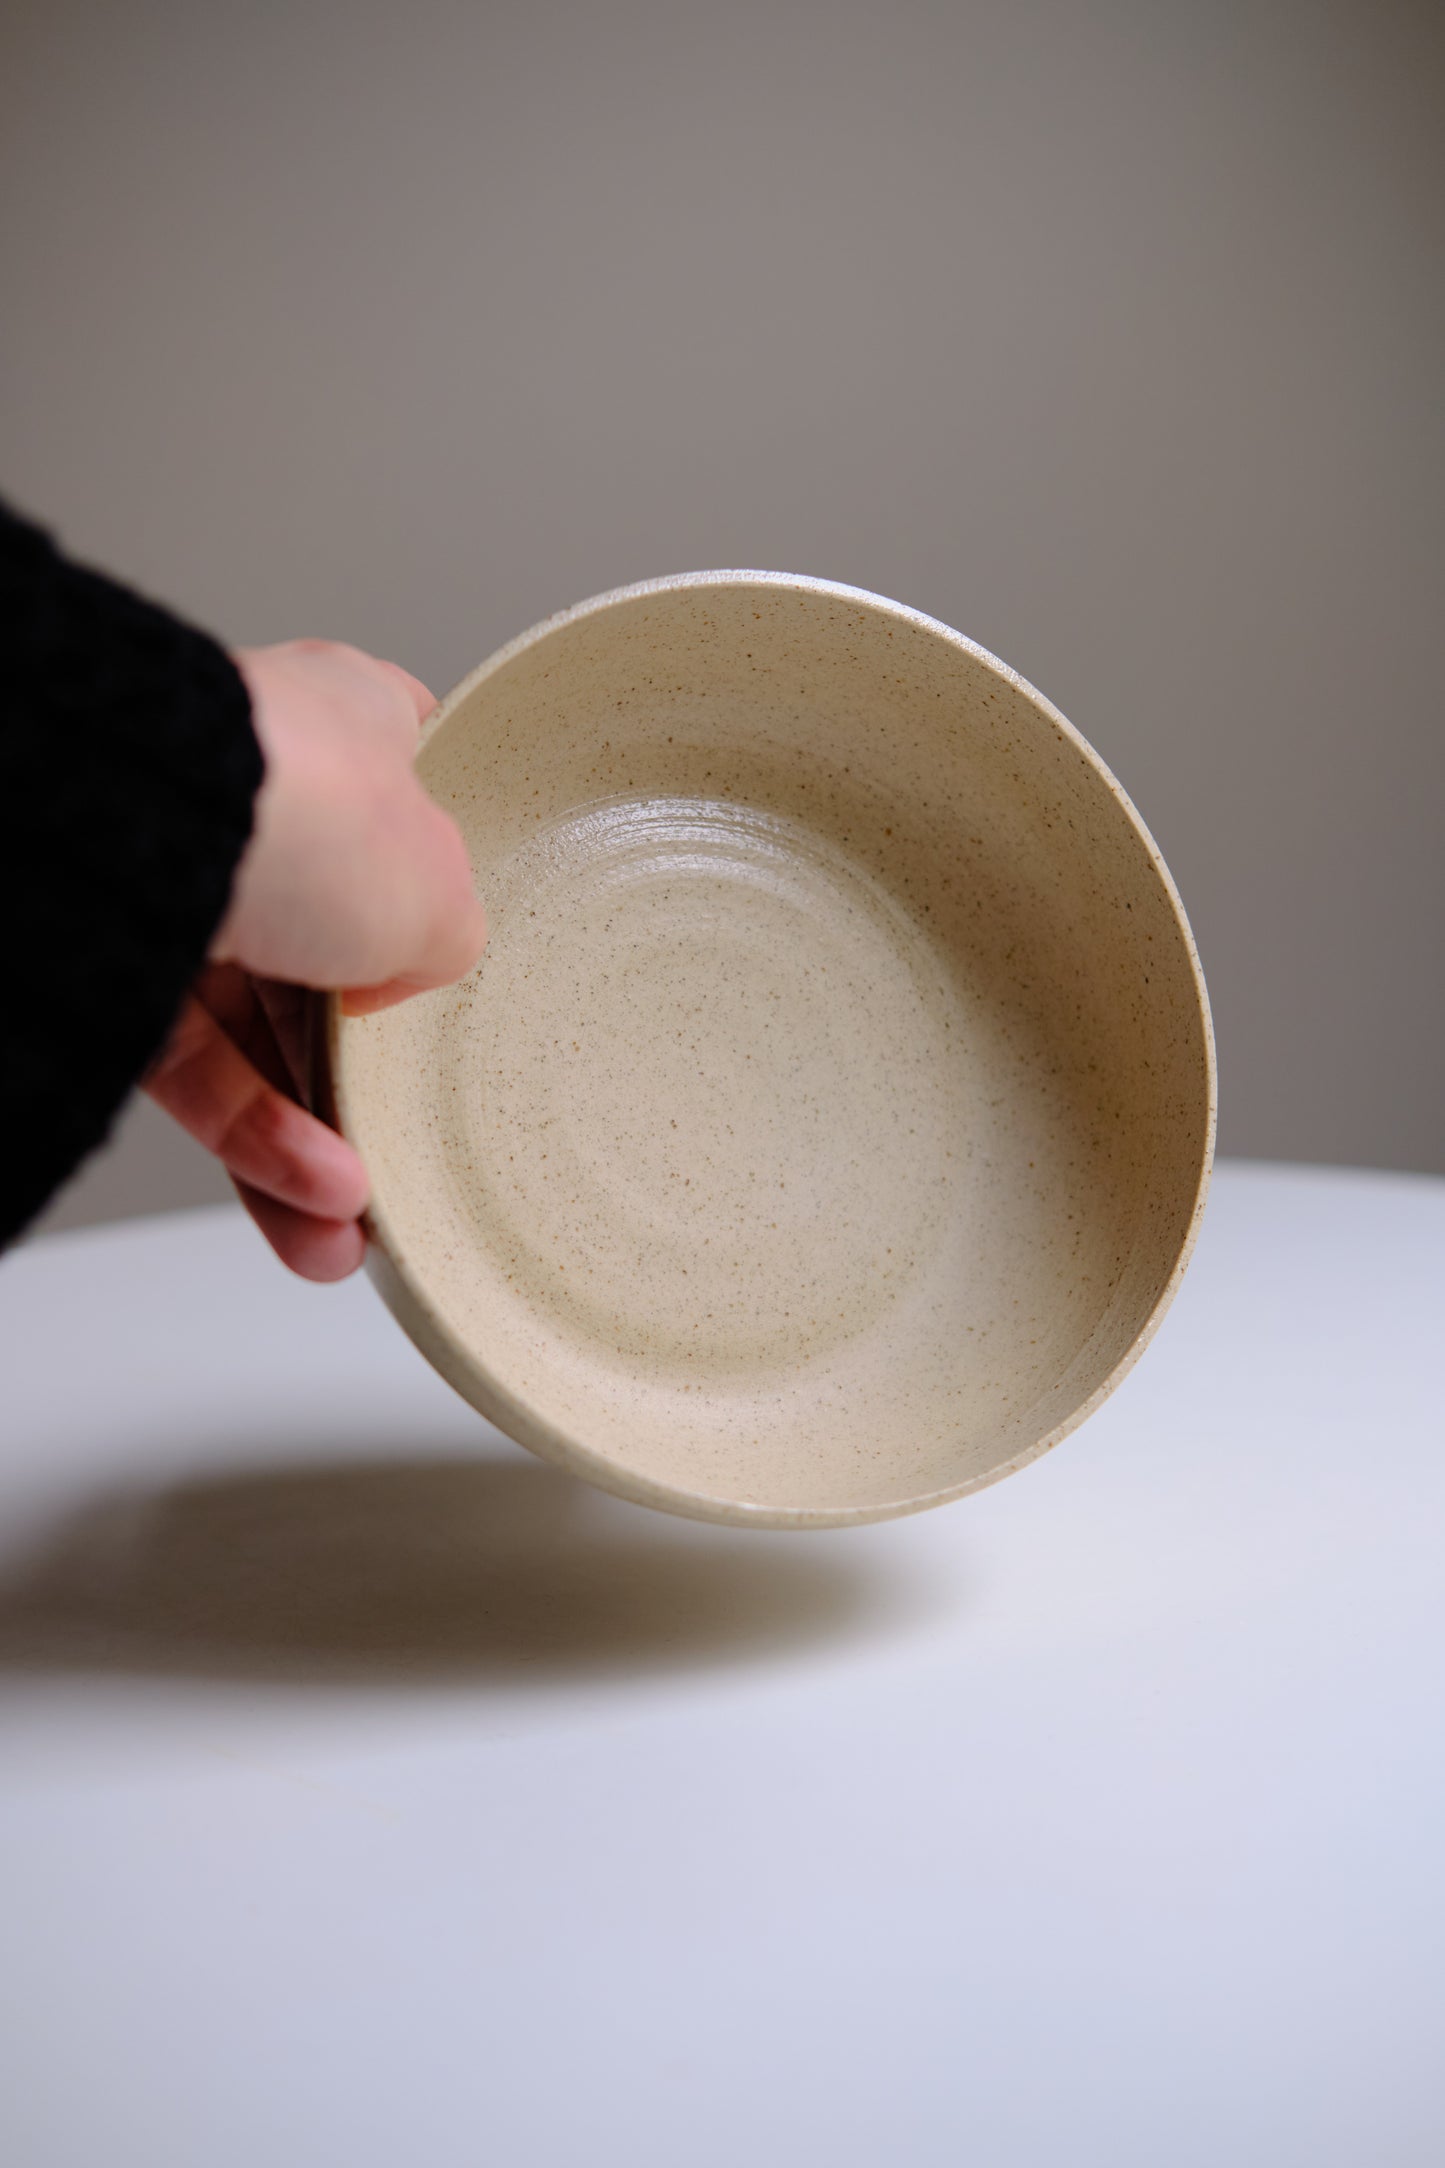 Pedestal bowl no. 19